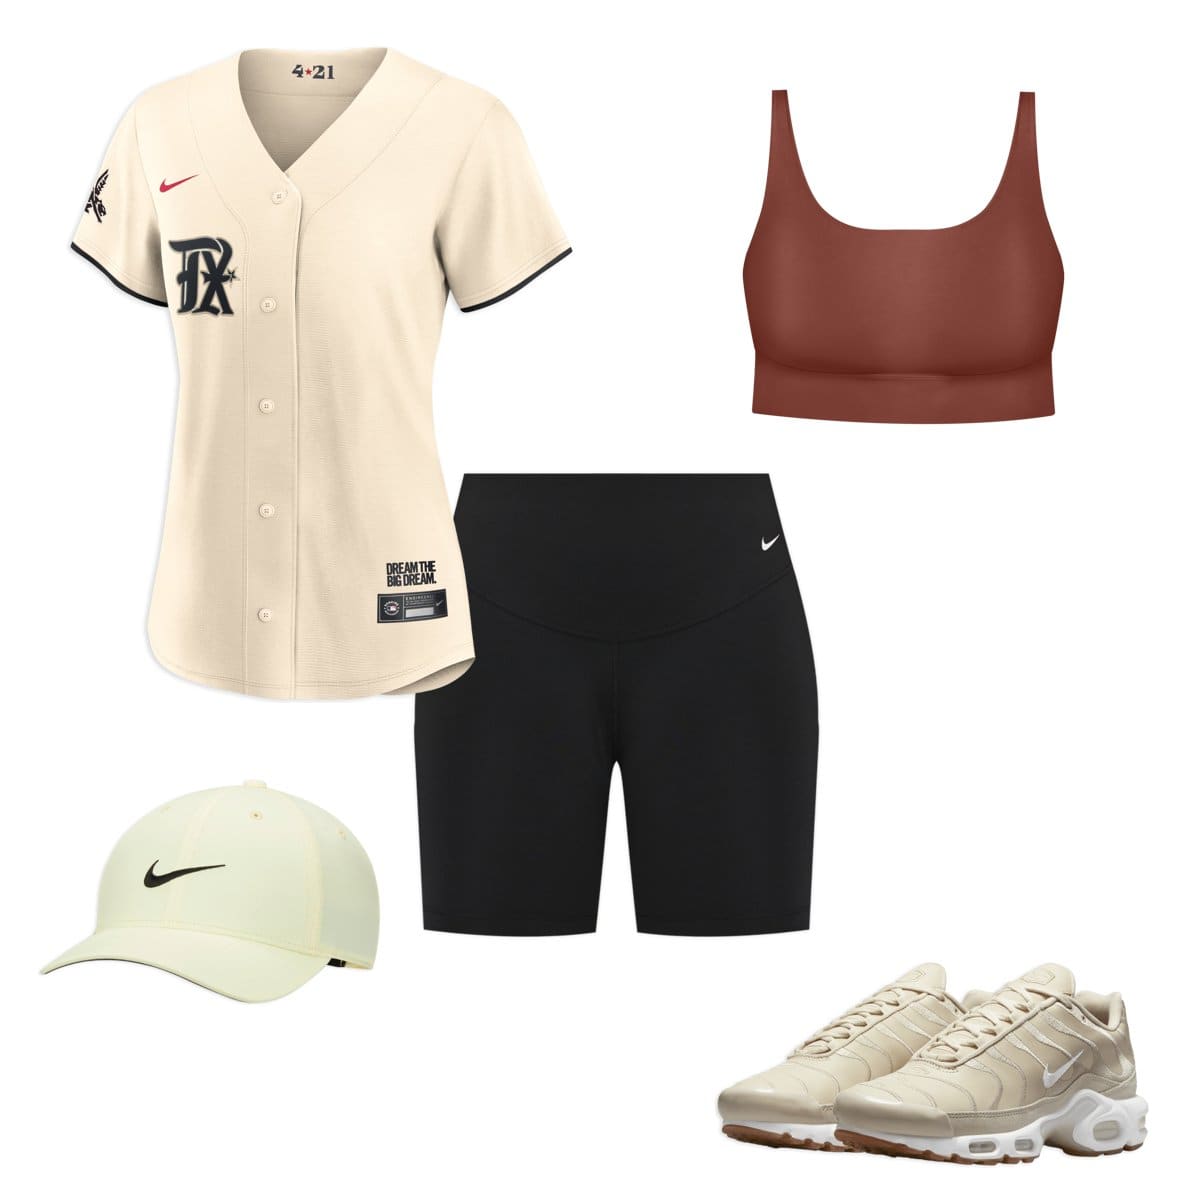 Comment porter un maillot de baseball Nike. Nike FR